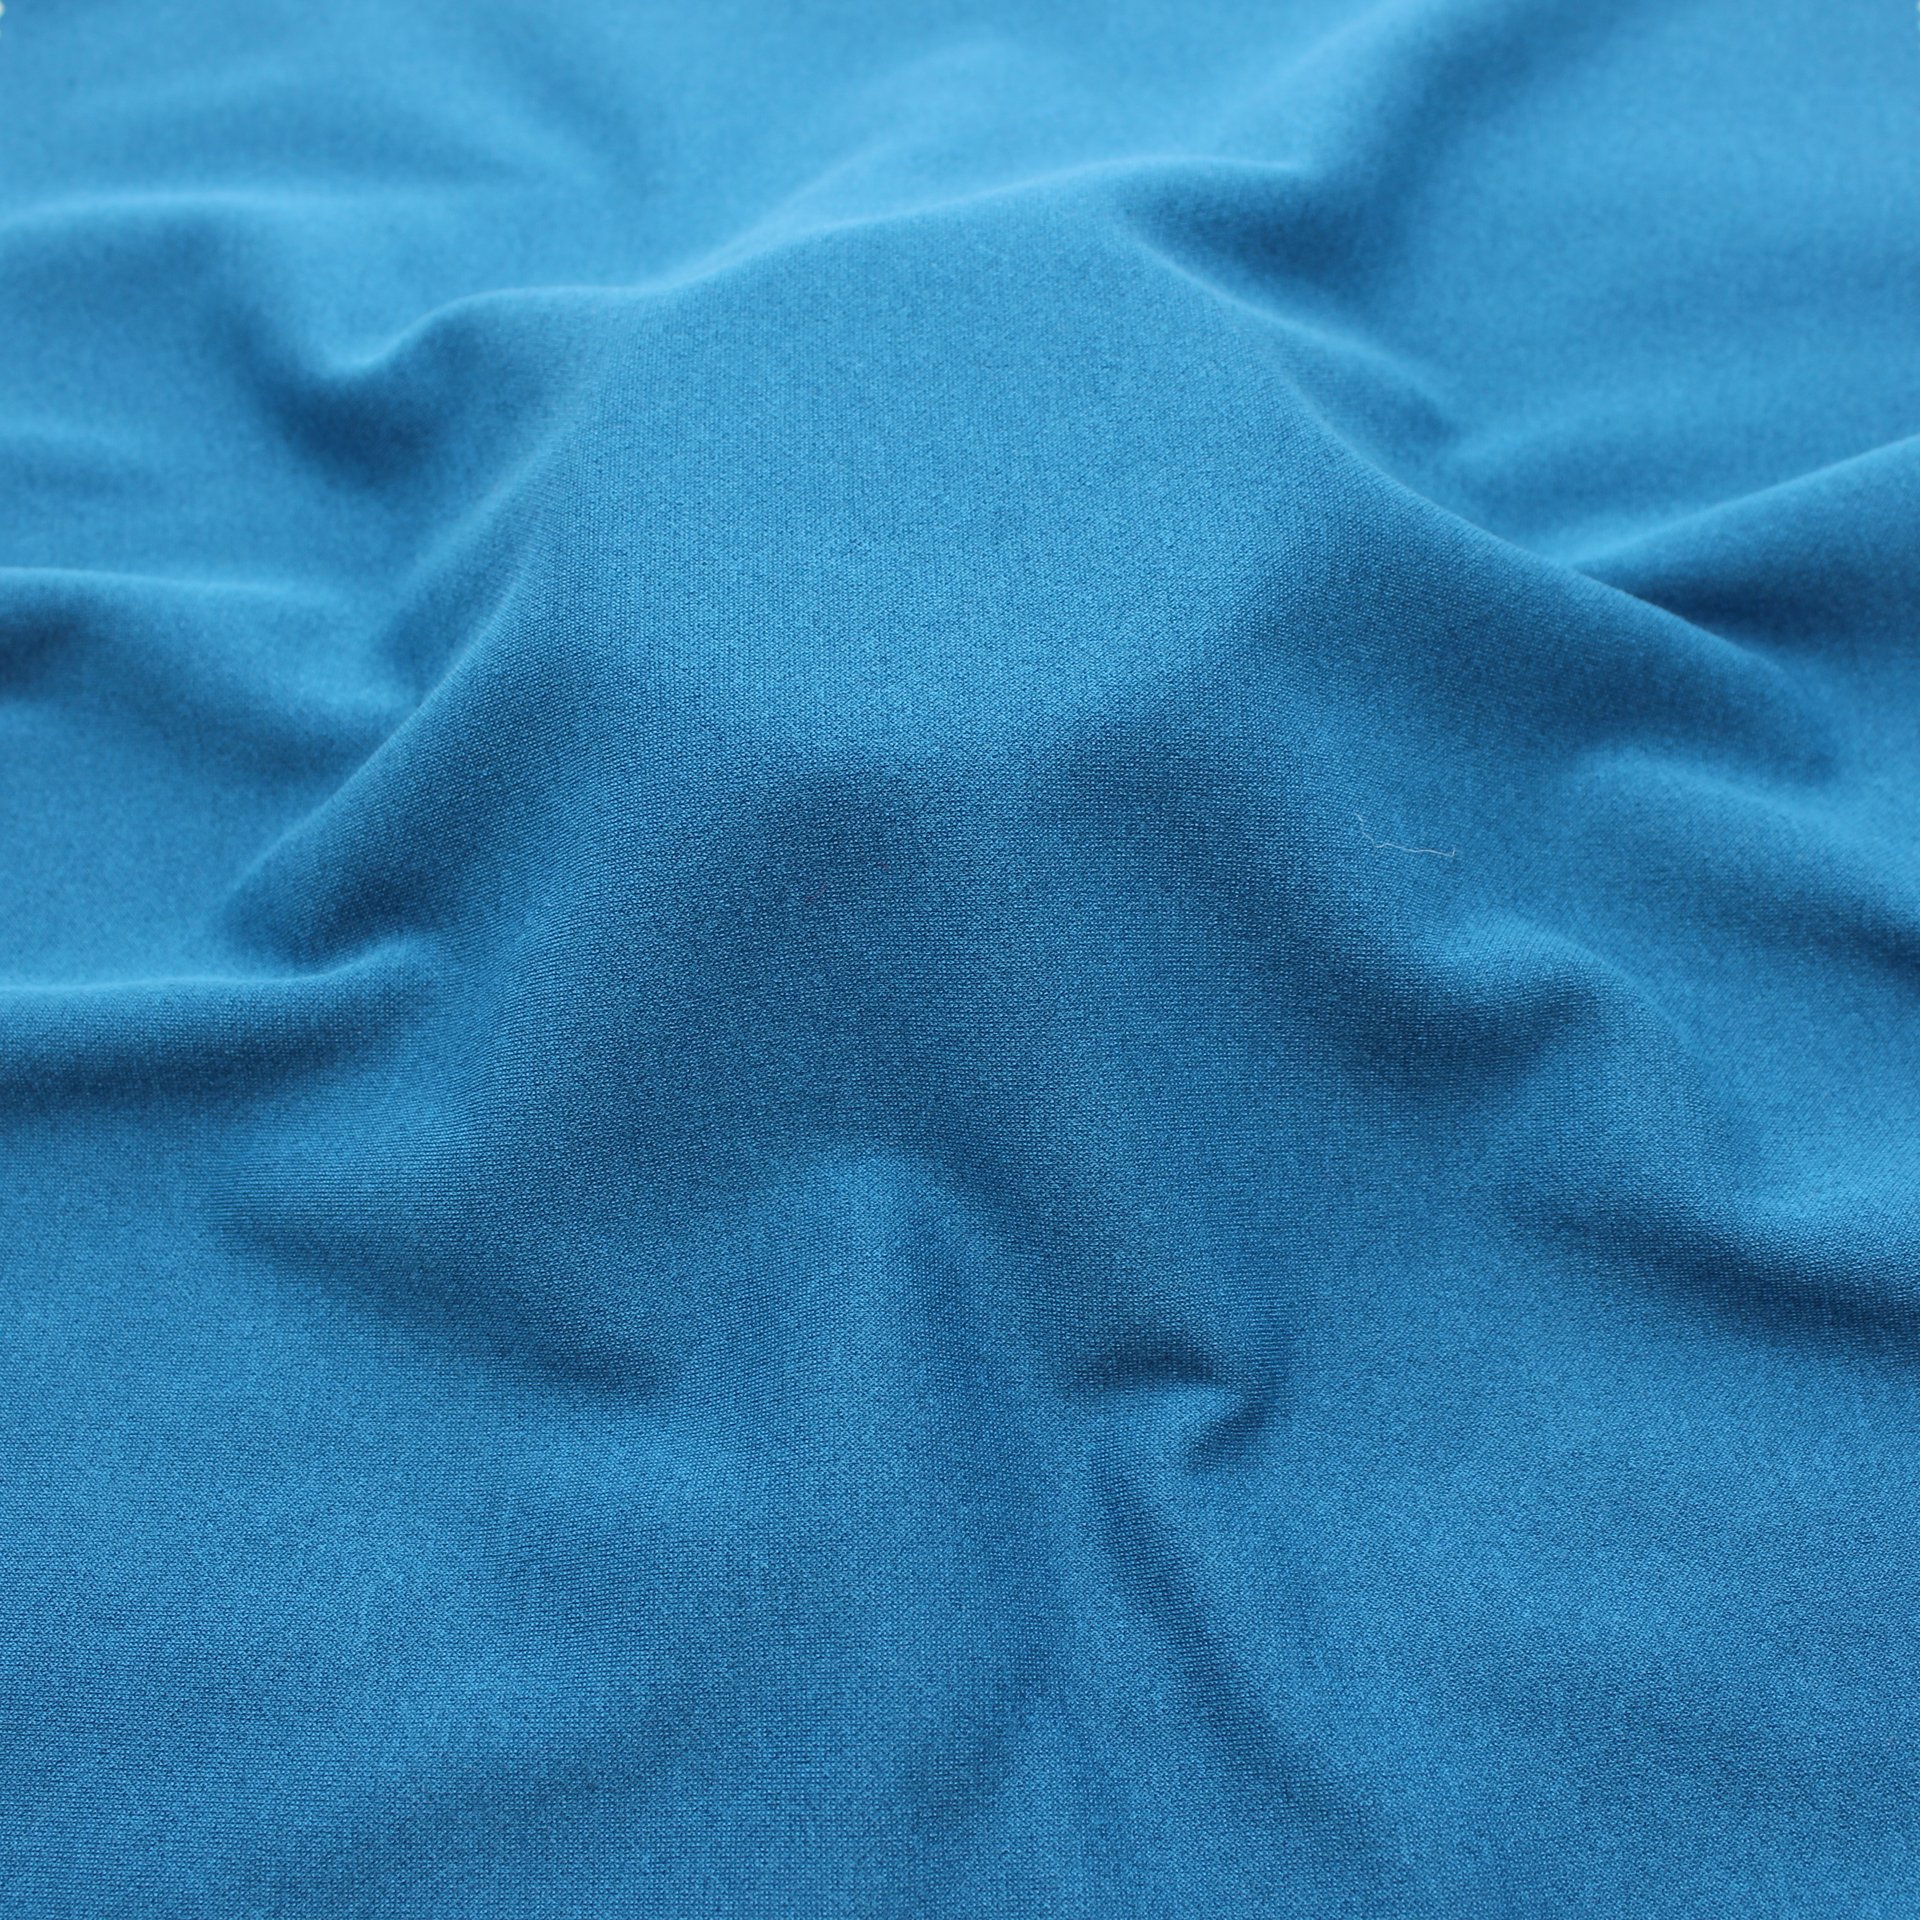 Cool fabric for sleepwear